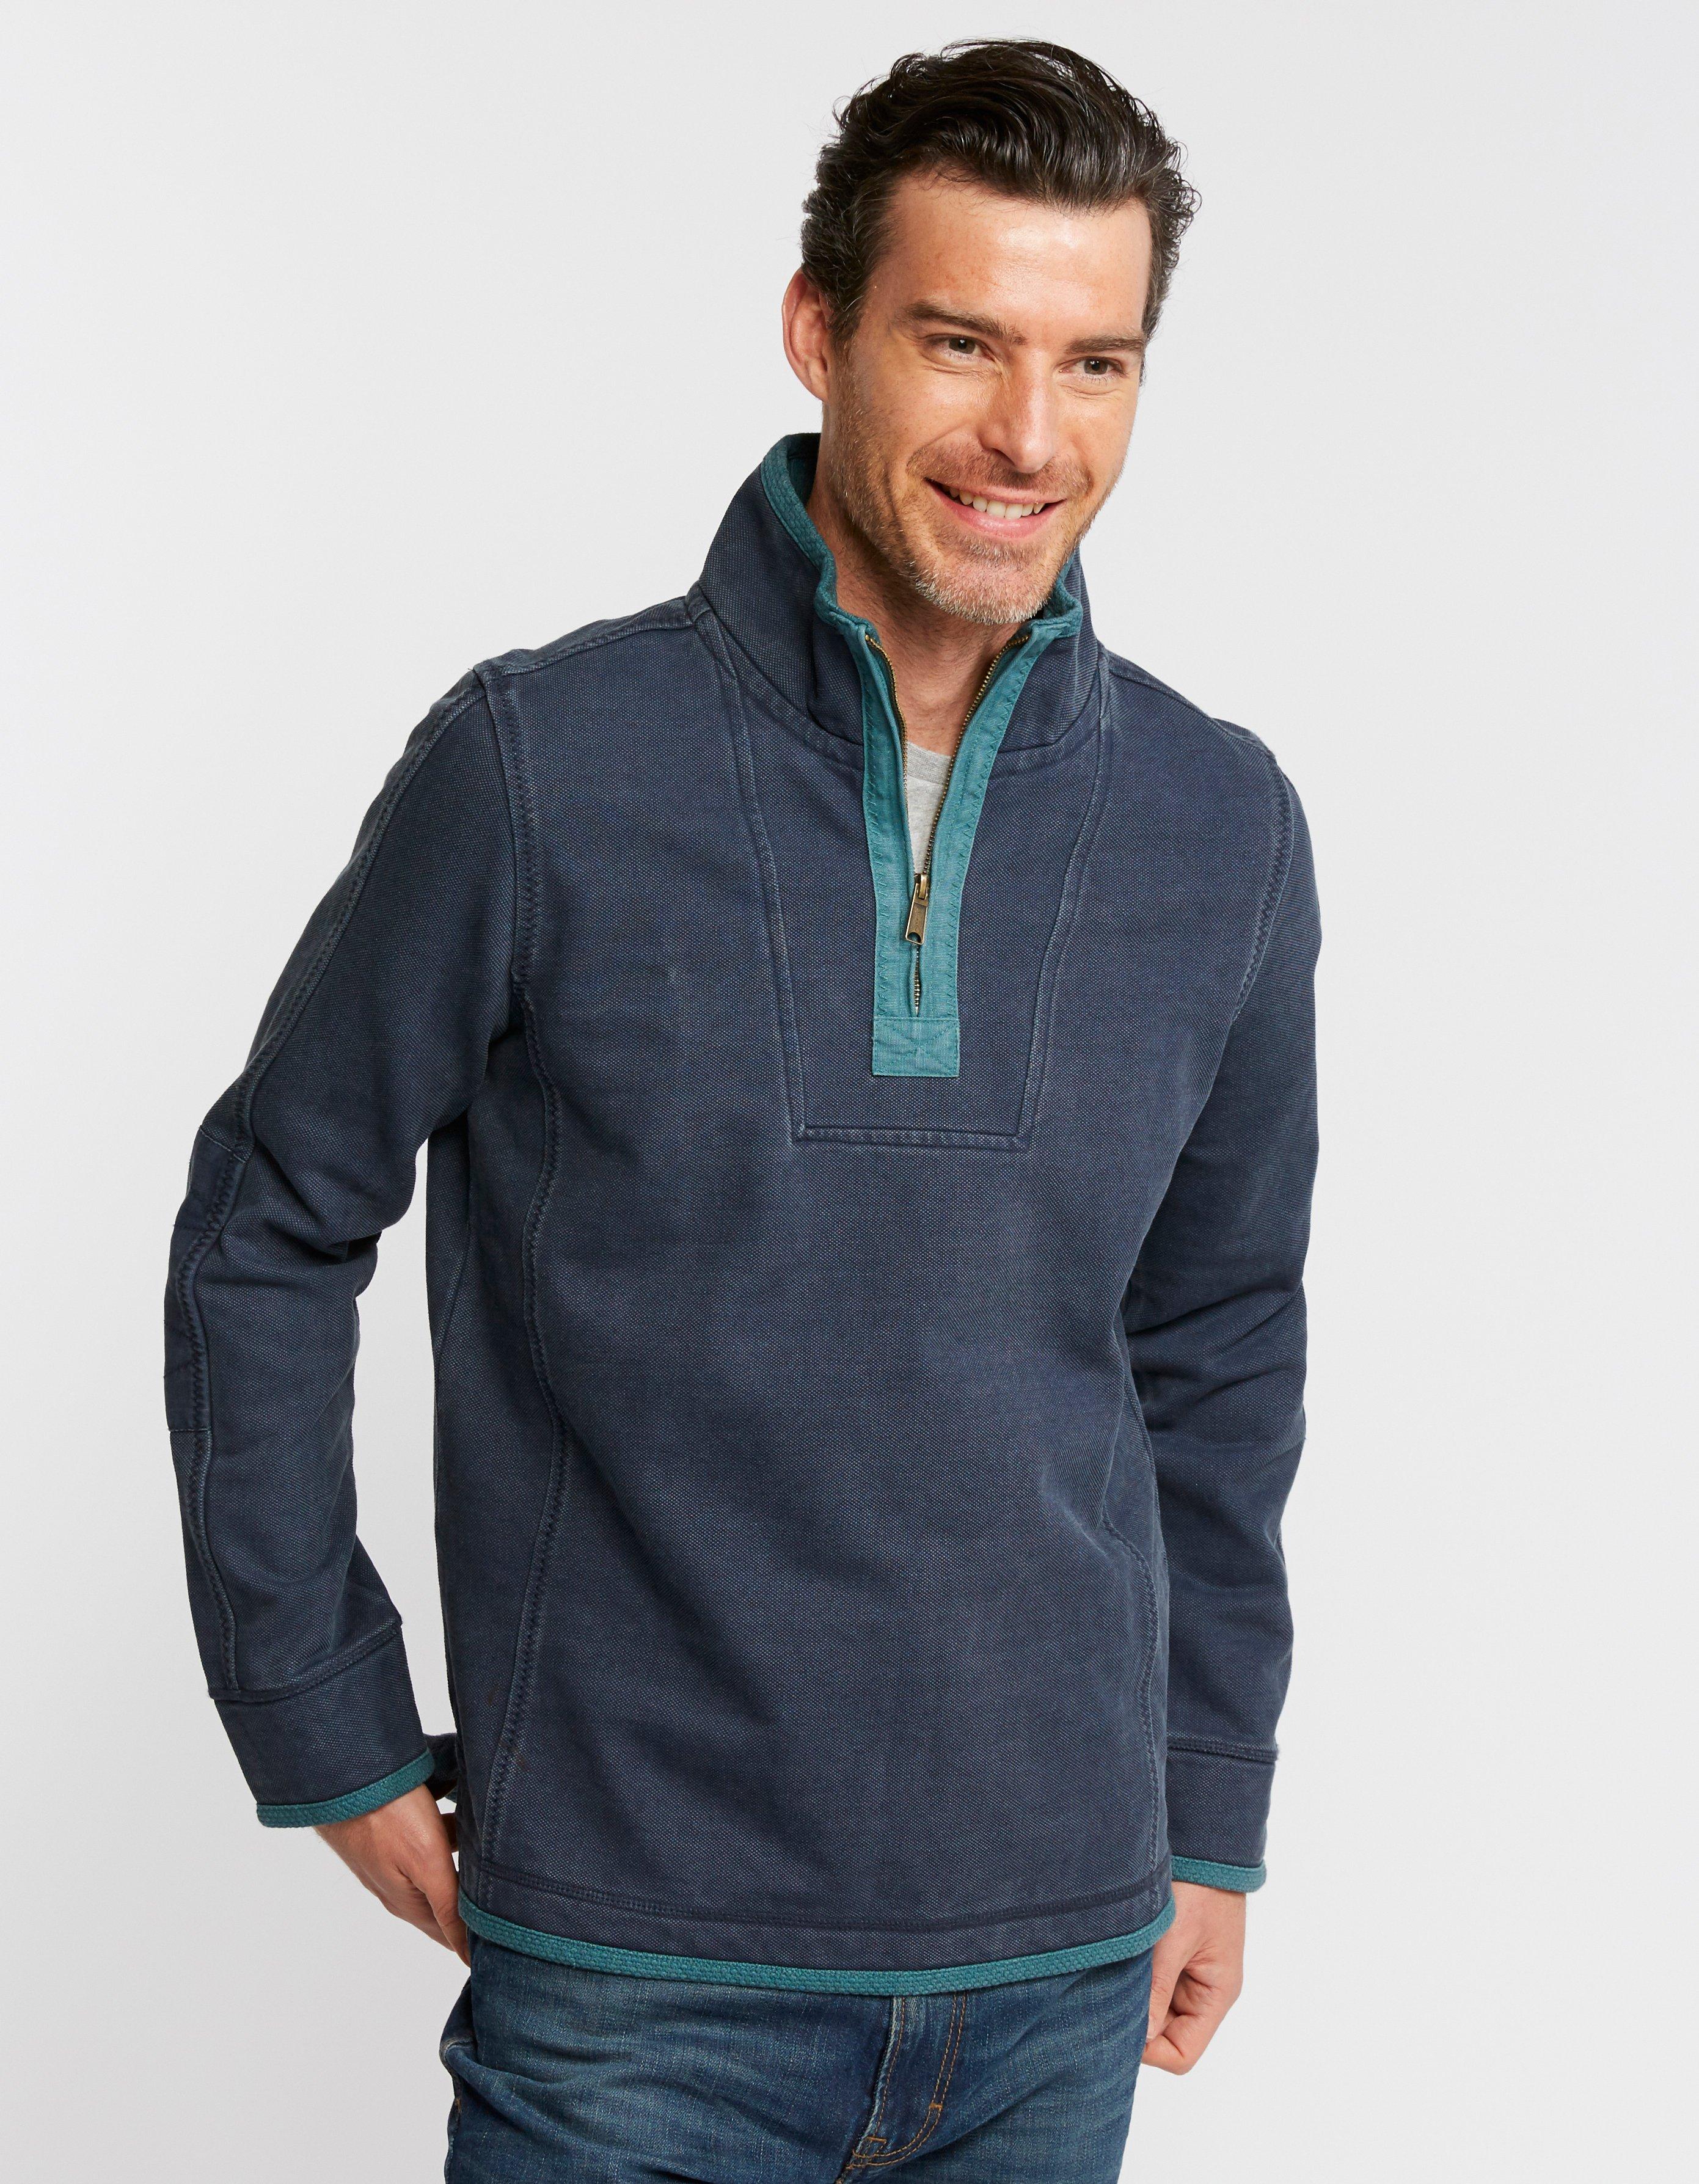 Quechua sweatshirt KIDS FASHION Jumpers & Sweatshirts Fleece Blue discount 94% 